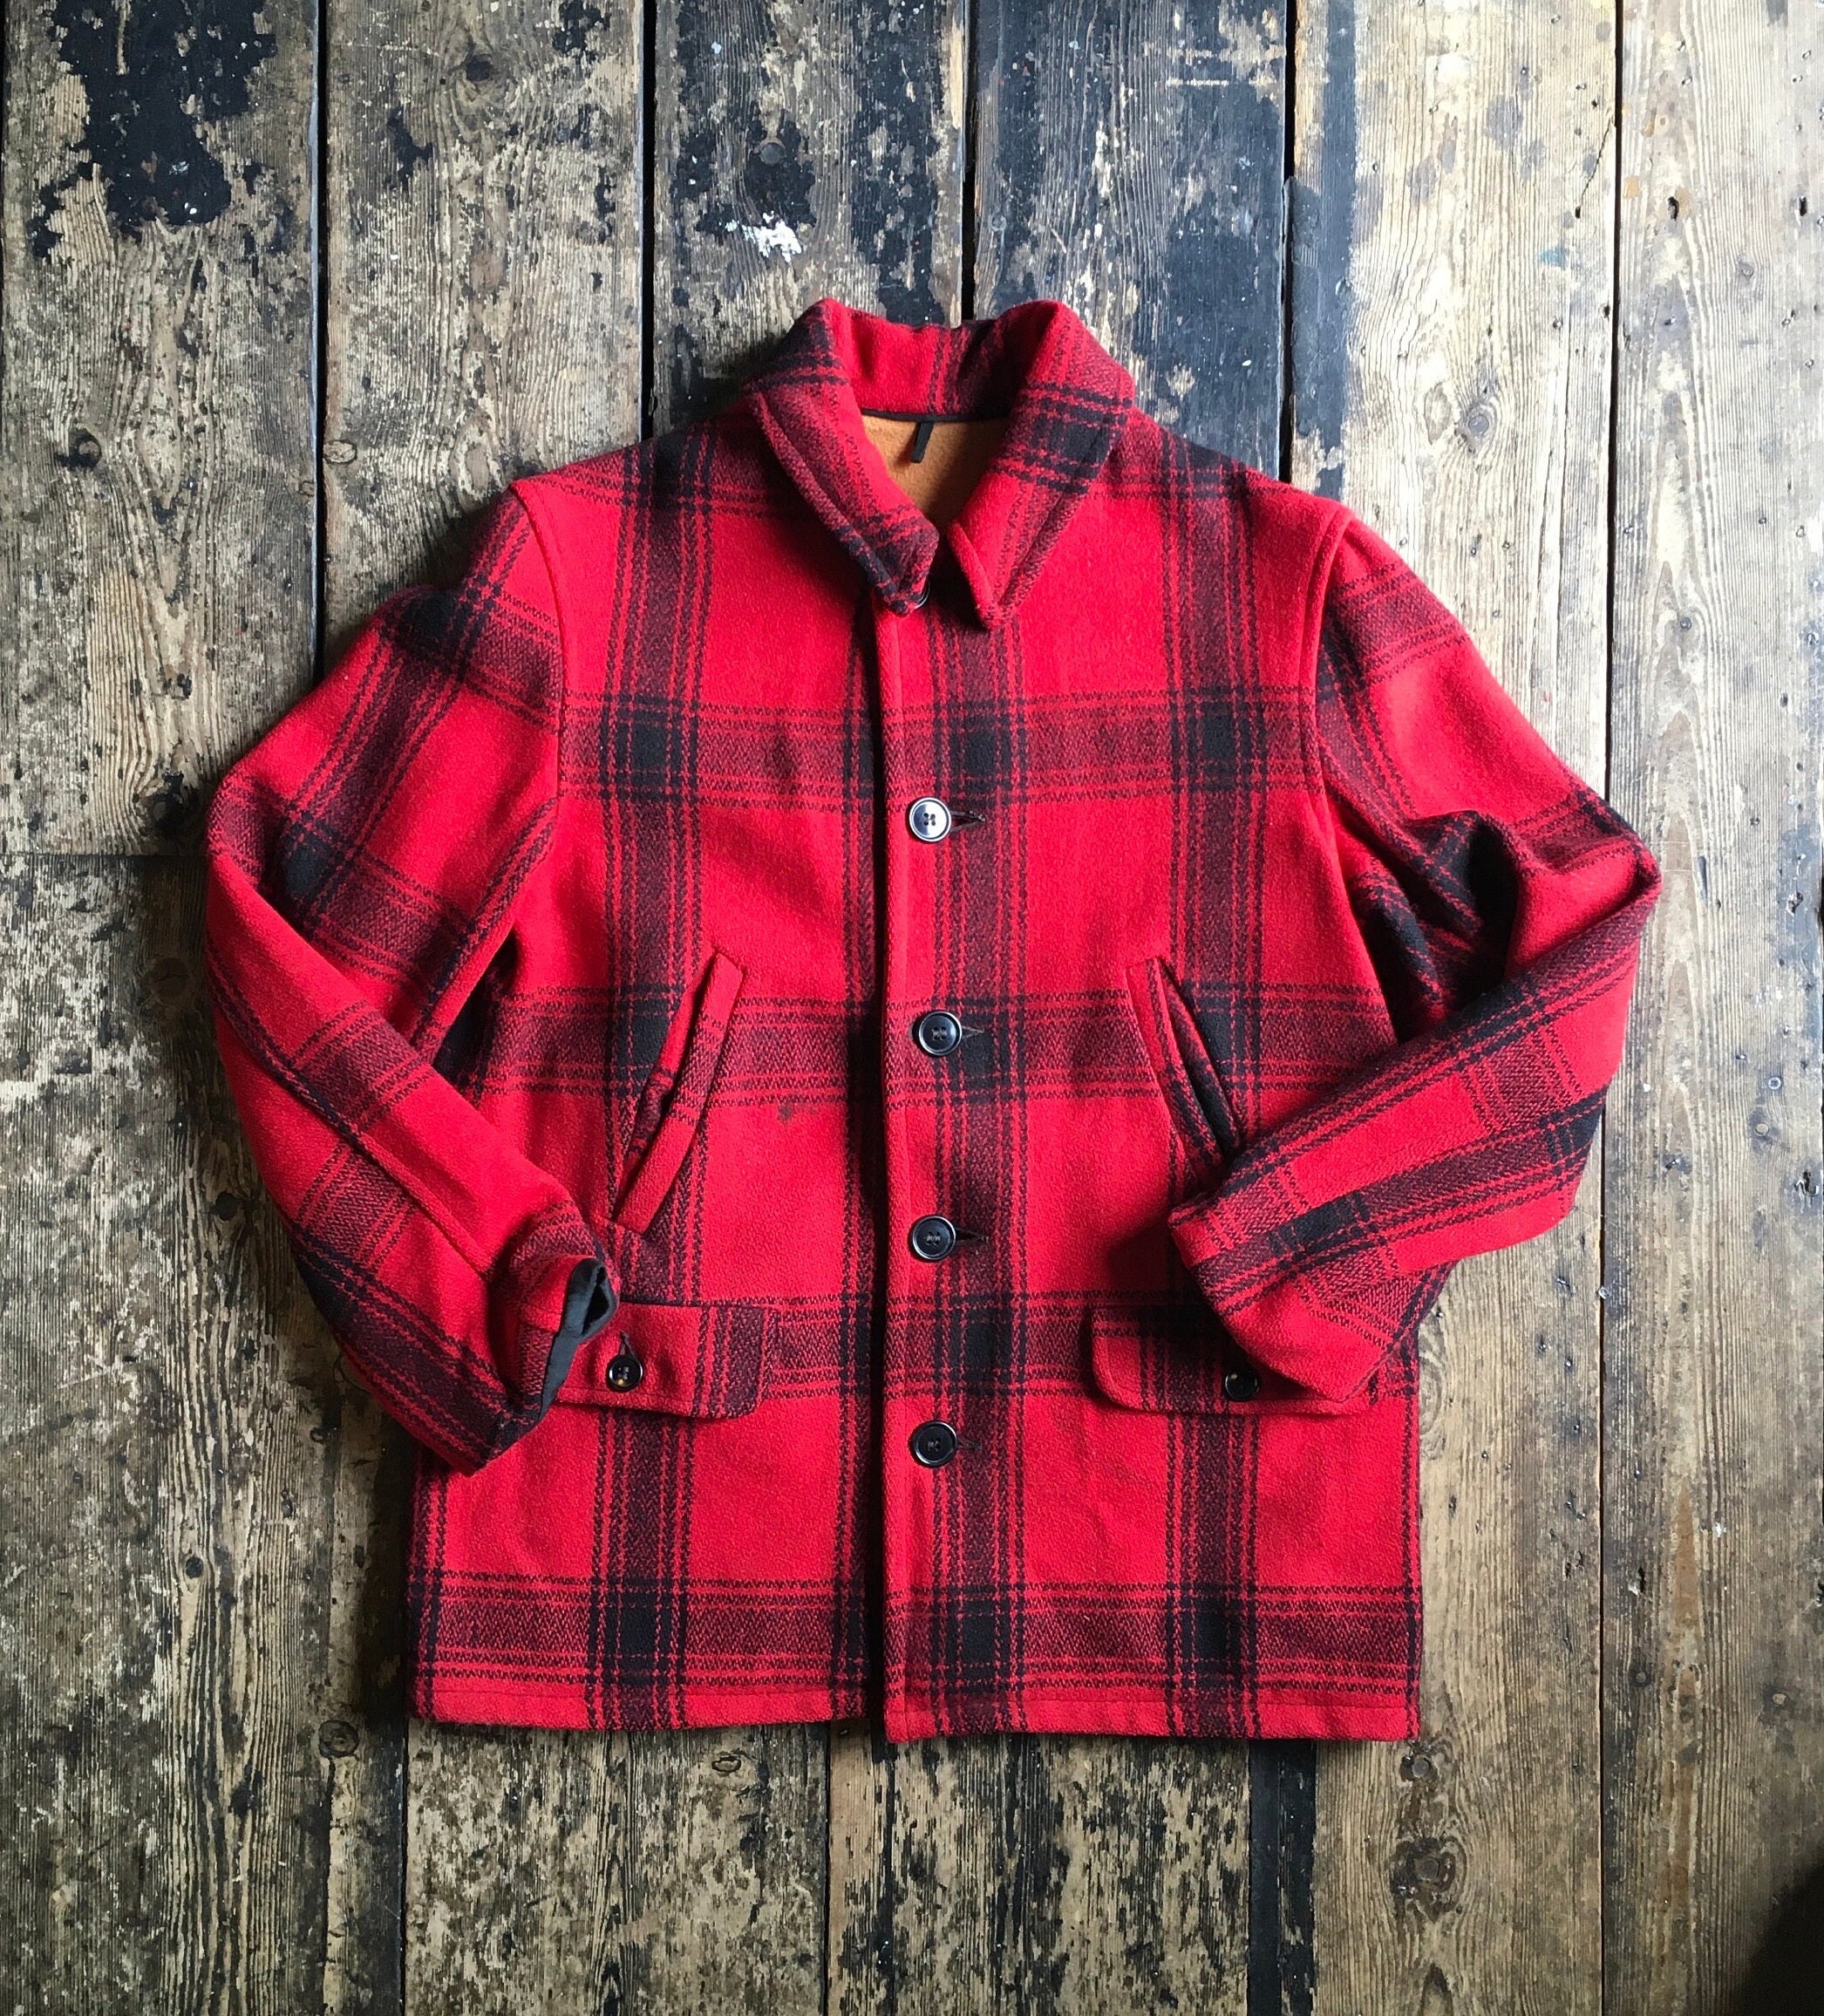 Vintage Filson Tin Cloth, Paraffin Waxed Jacket. Size 42 Workwear, Chore,  Shooting, Hunting Jacket. 